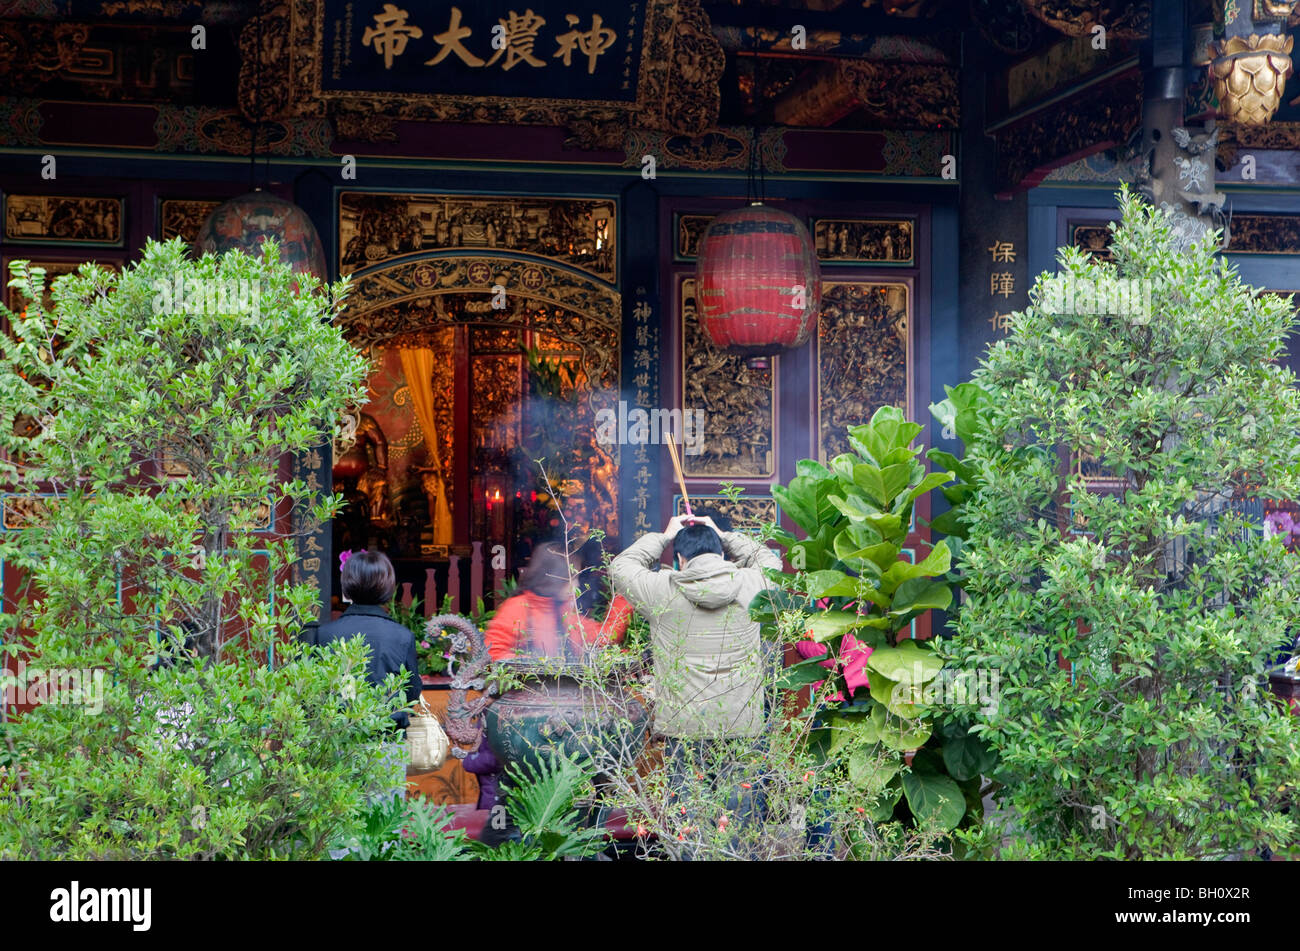 Praying Taoists at the courtyard of the Bao-an Temple, Shida district, Taipei, Taiwan, Asia Stock Photo